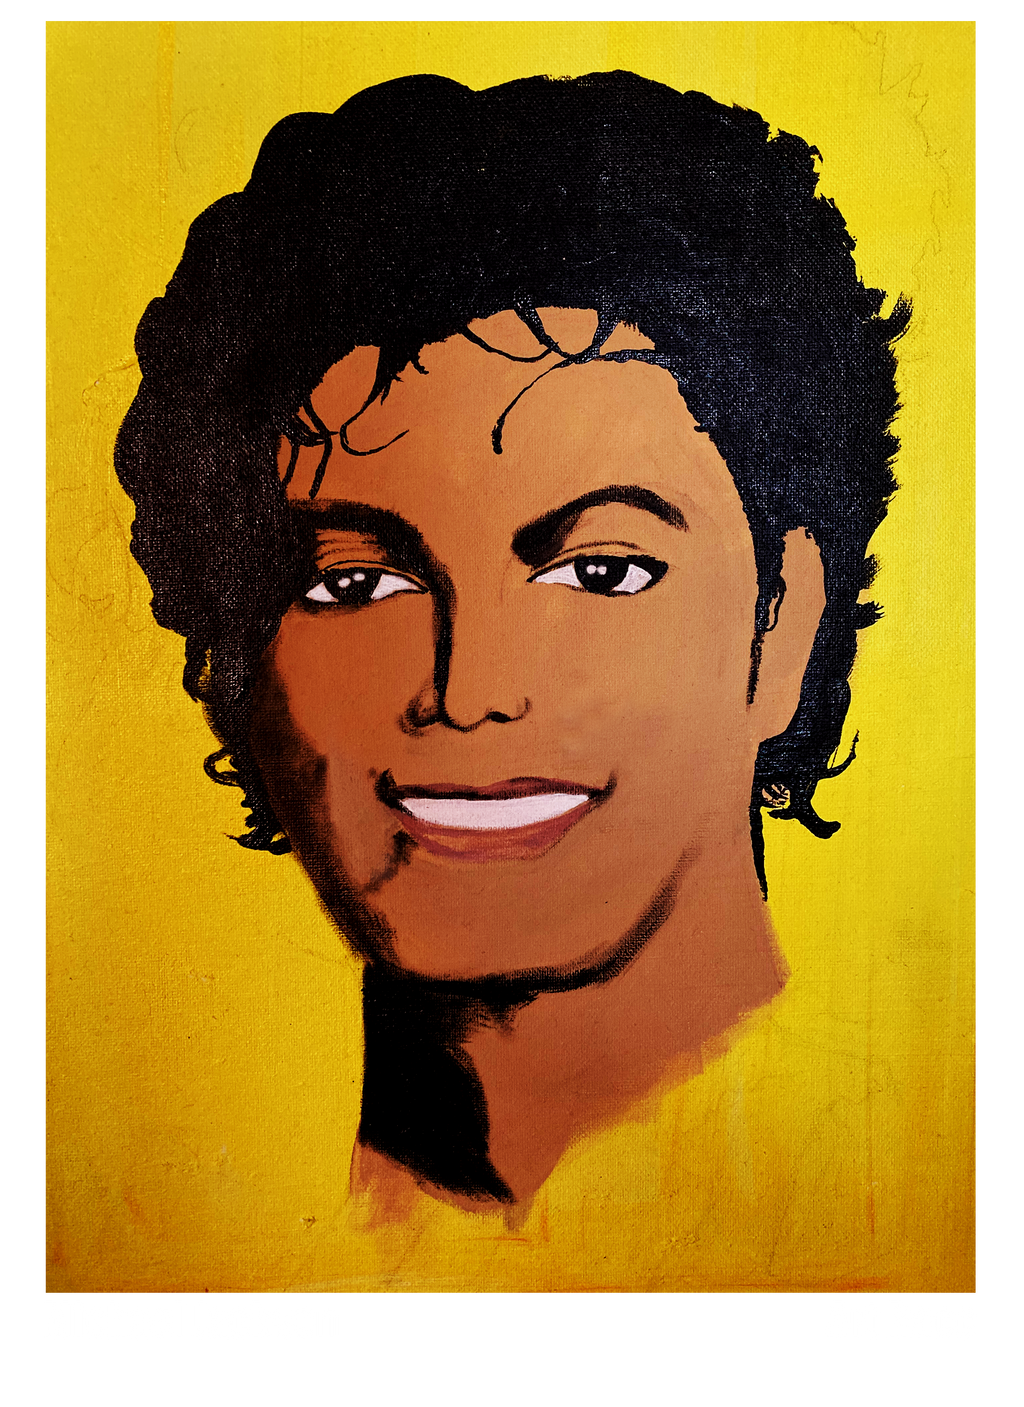 Michael Jackson by Art Racc